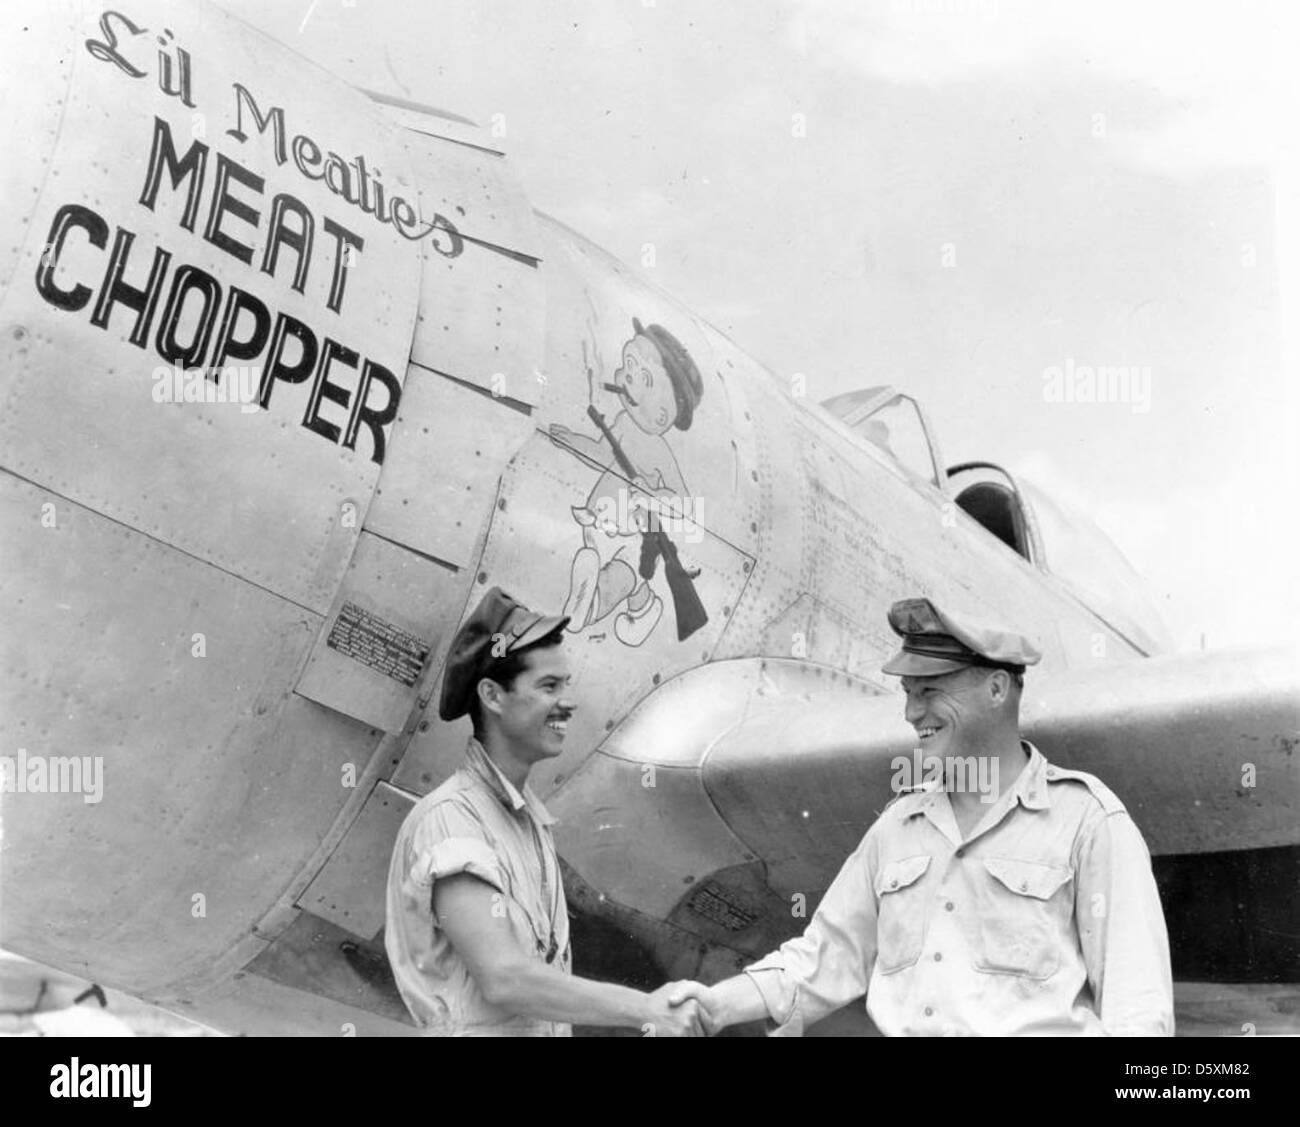 Republic P-47 'Thunderbolt' 'Lil Meaties MEAT CHOPPER' nose art. Stock Photo